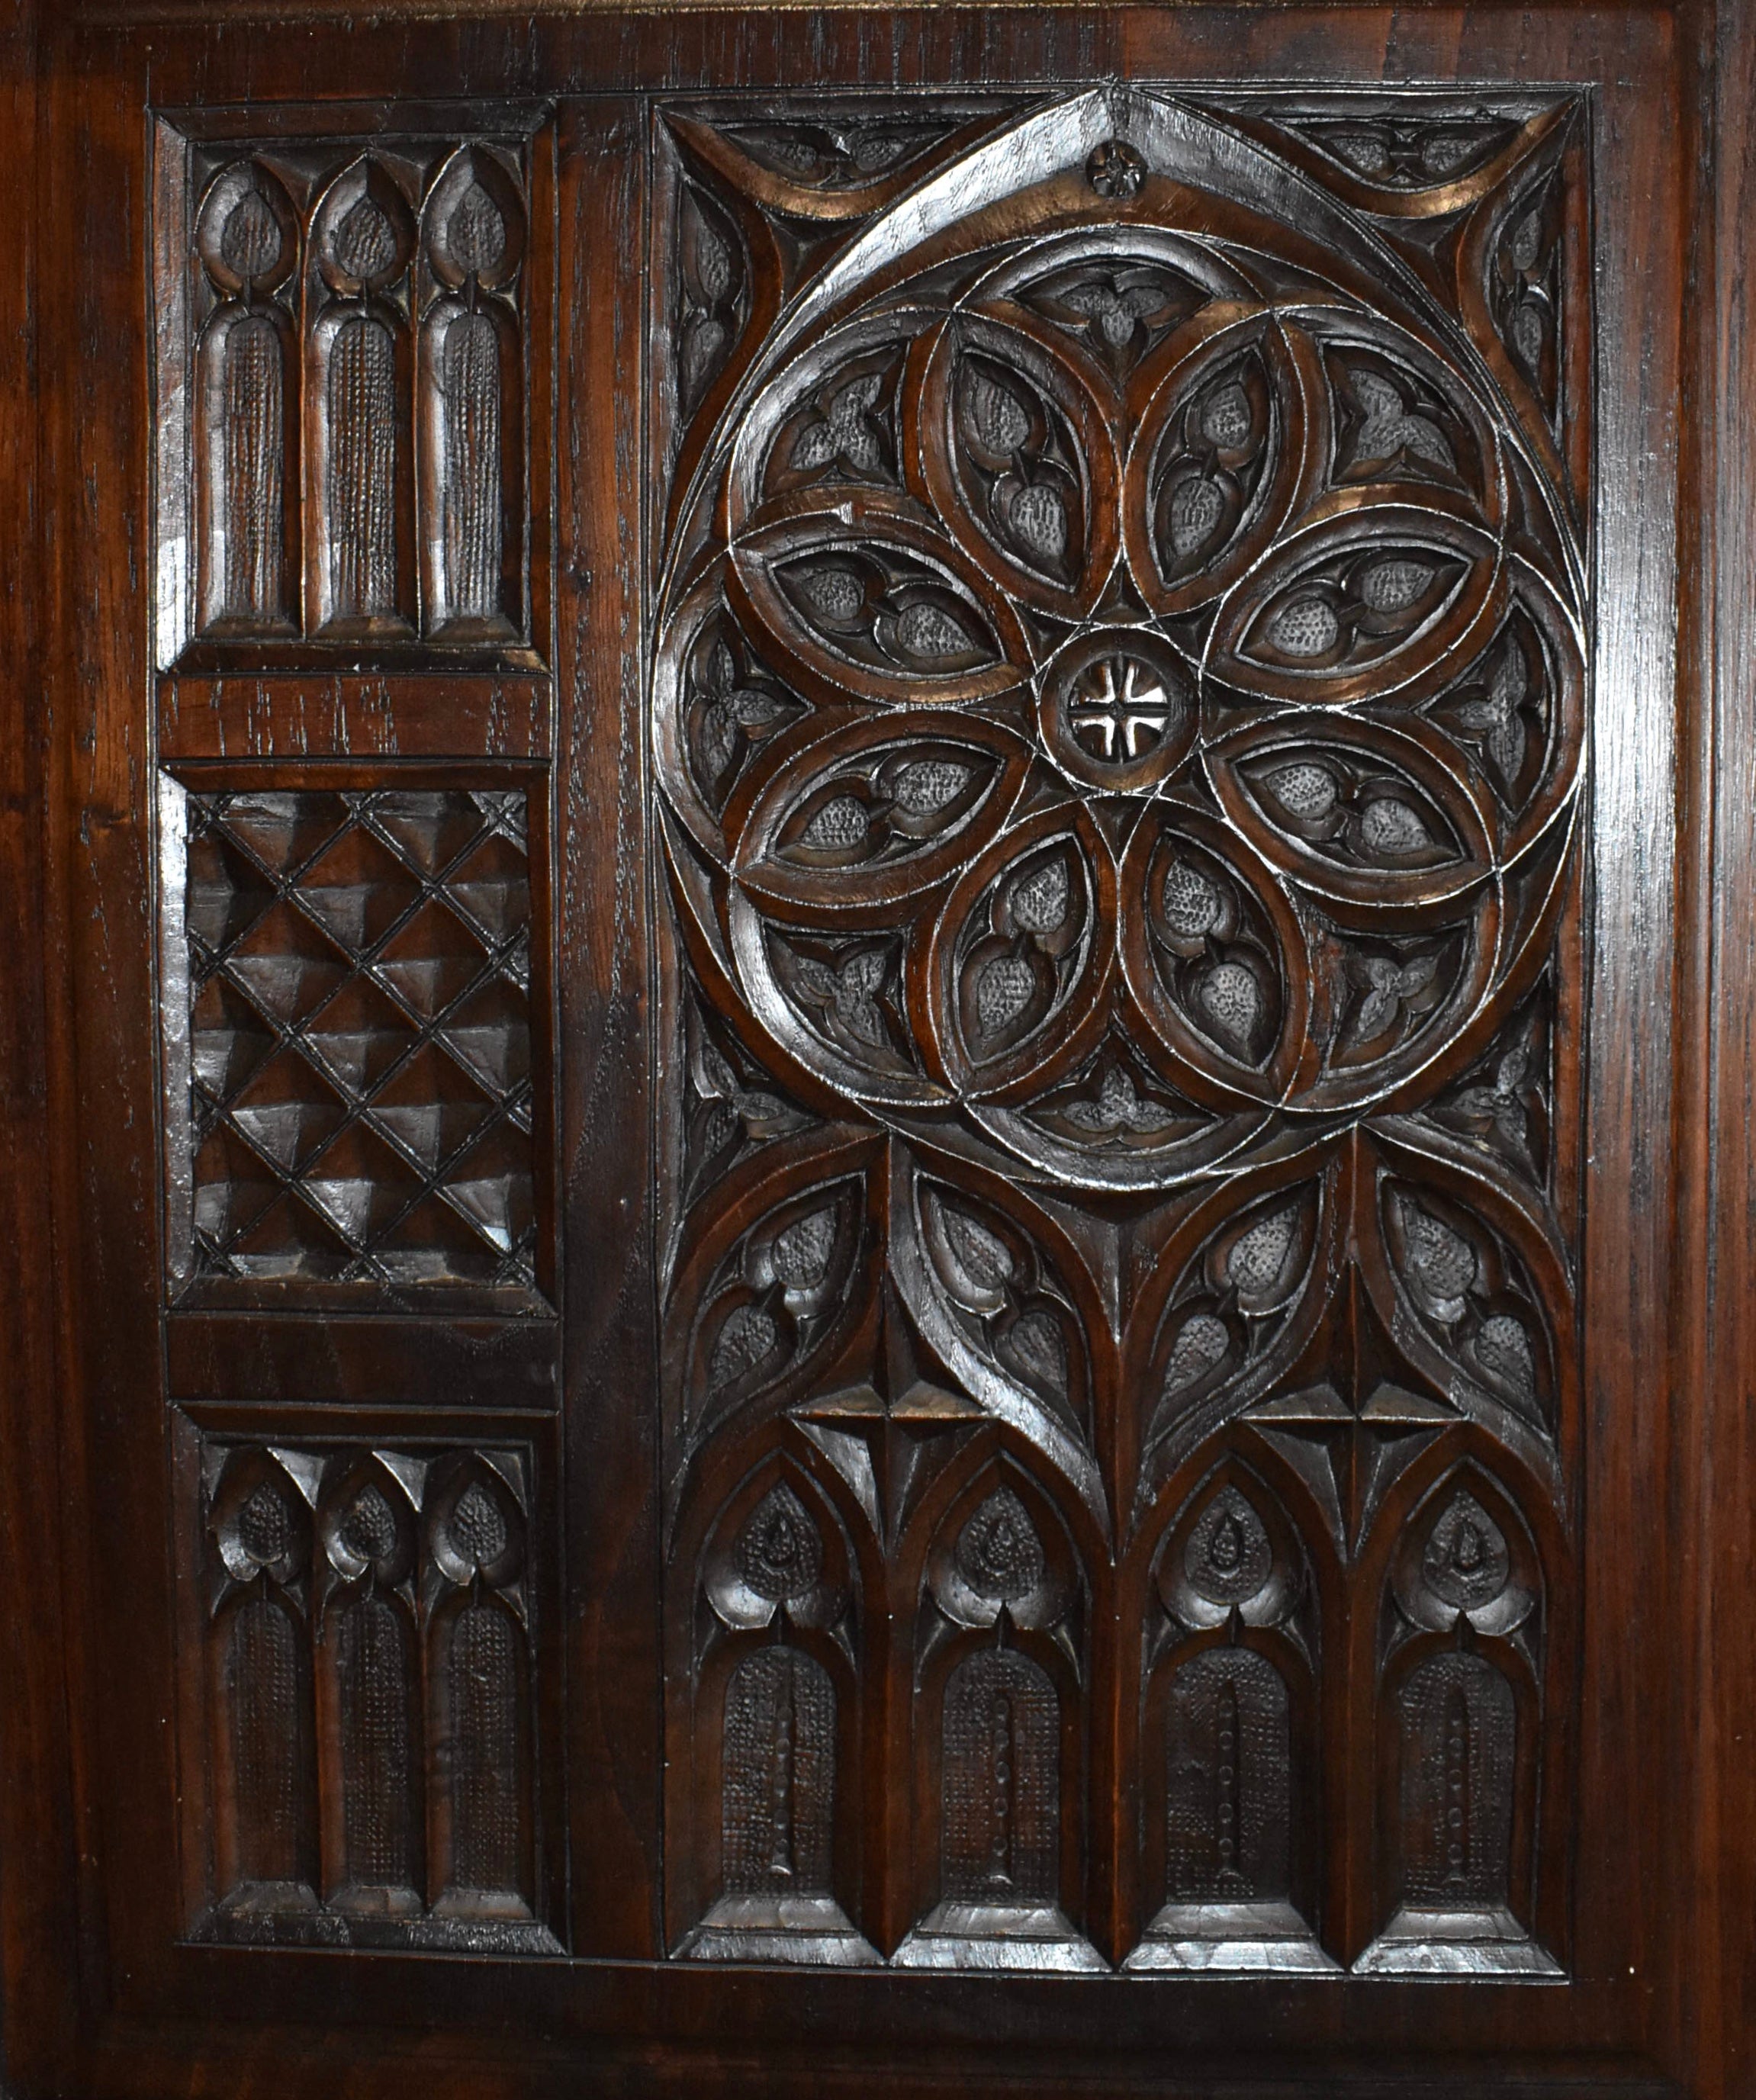 Narrow Gothic Revival Oak Cabinet